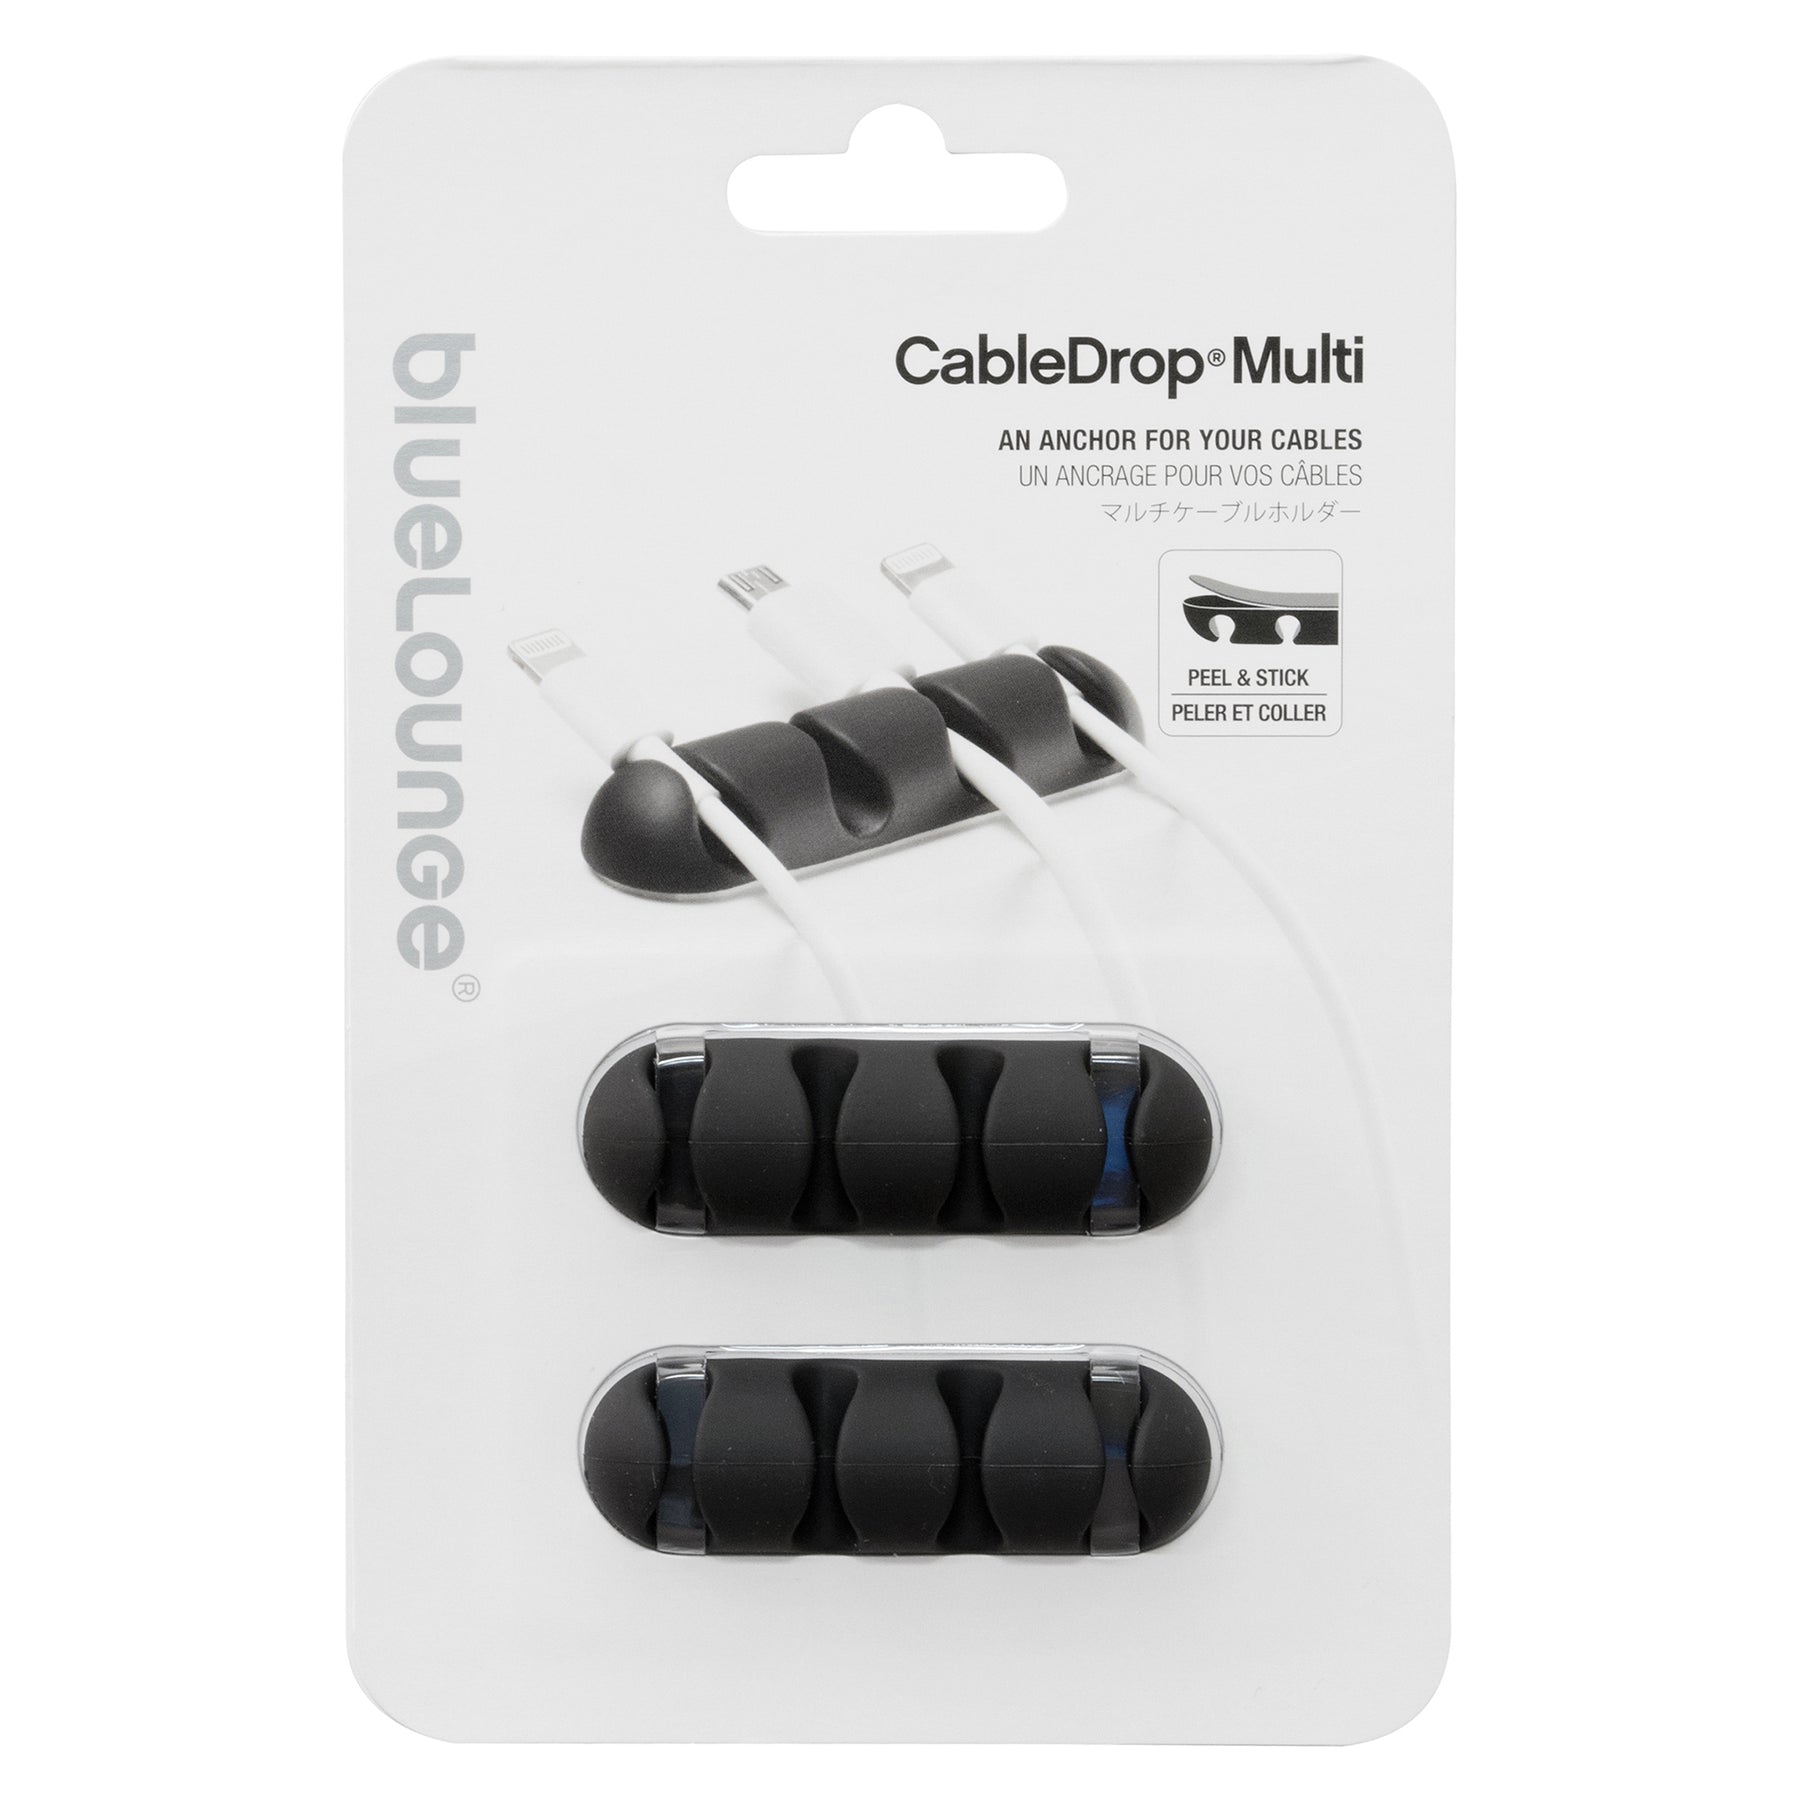 CableDrop Multi